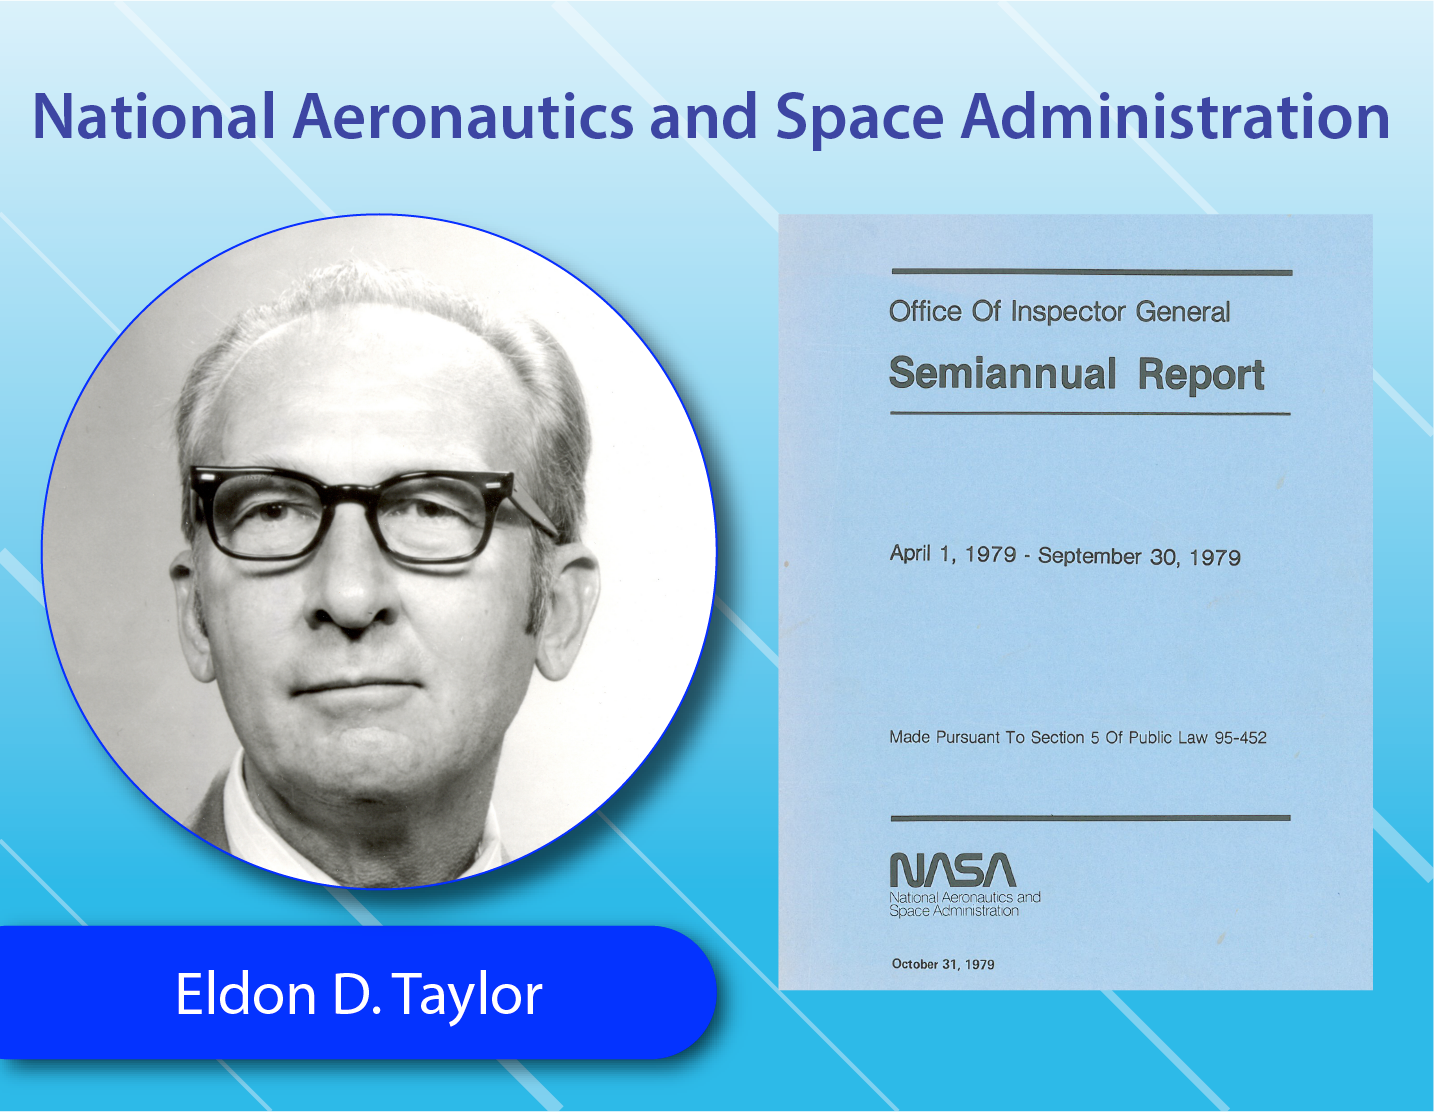 National Aeronautics and Space Administration - Eldon D. Taylor